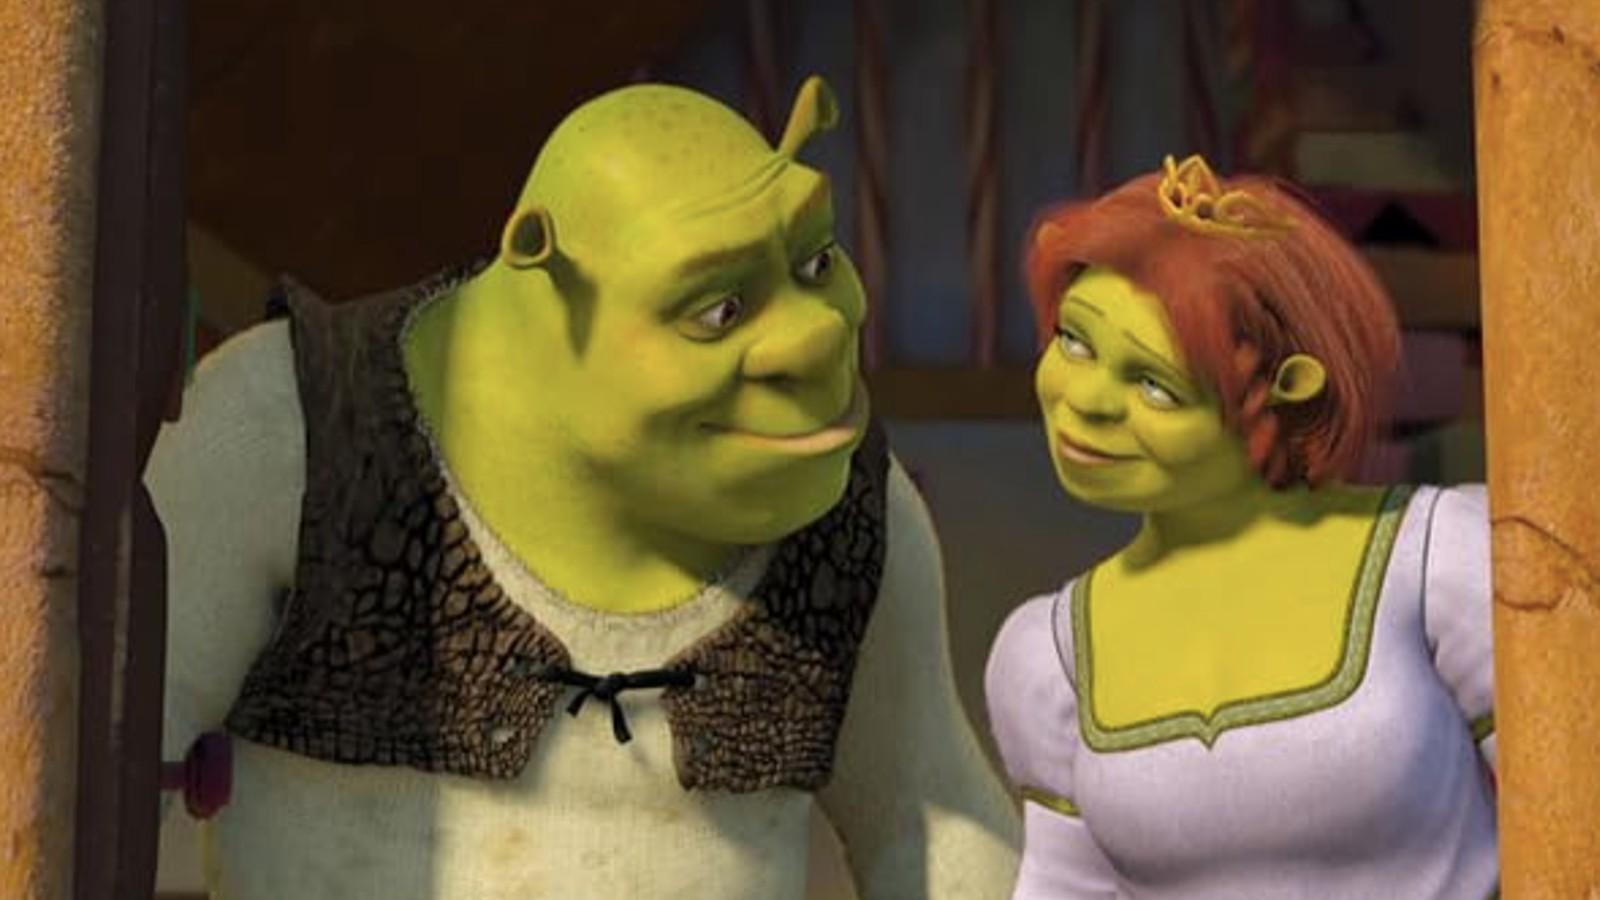 Shrek and Princess Fiona in Shrek 2